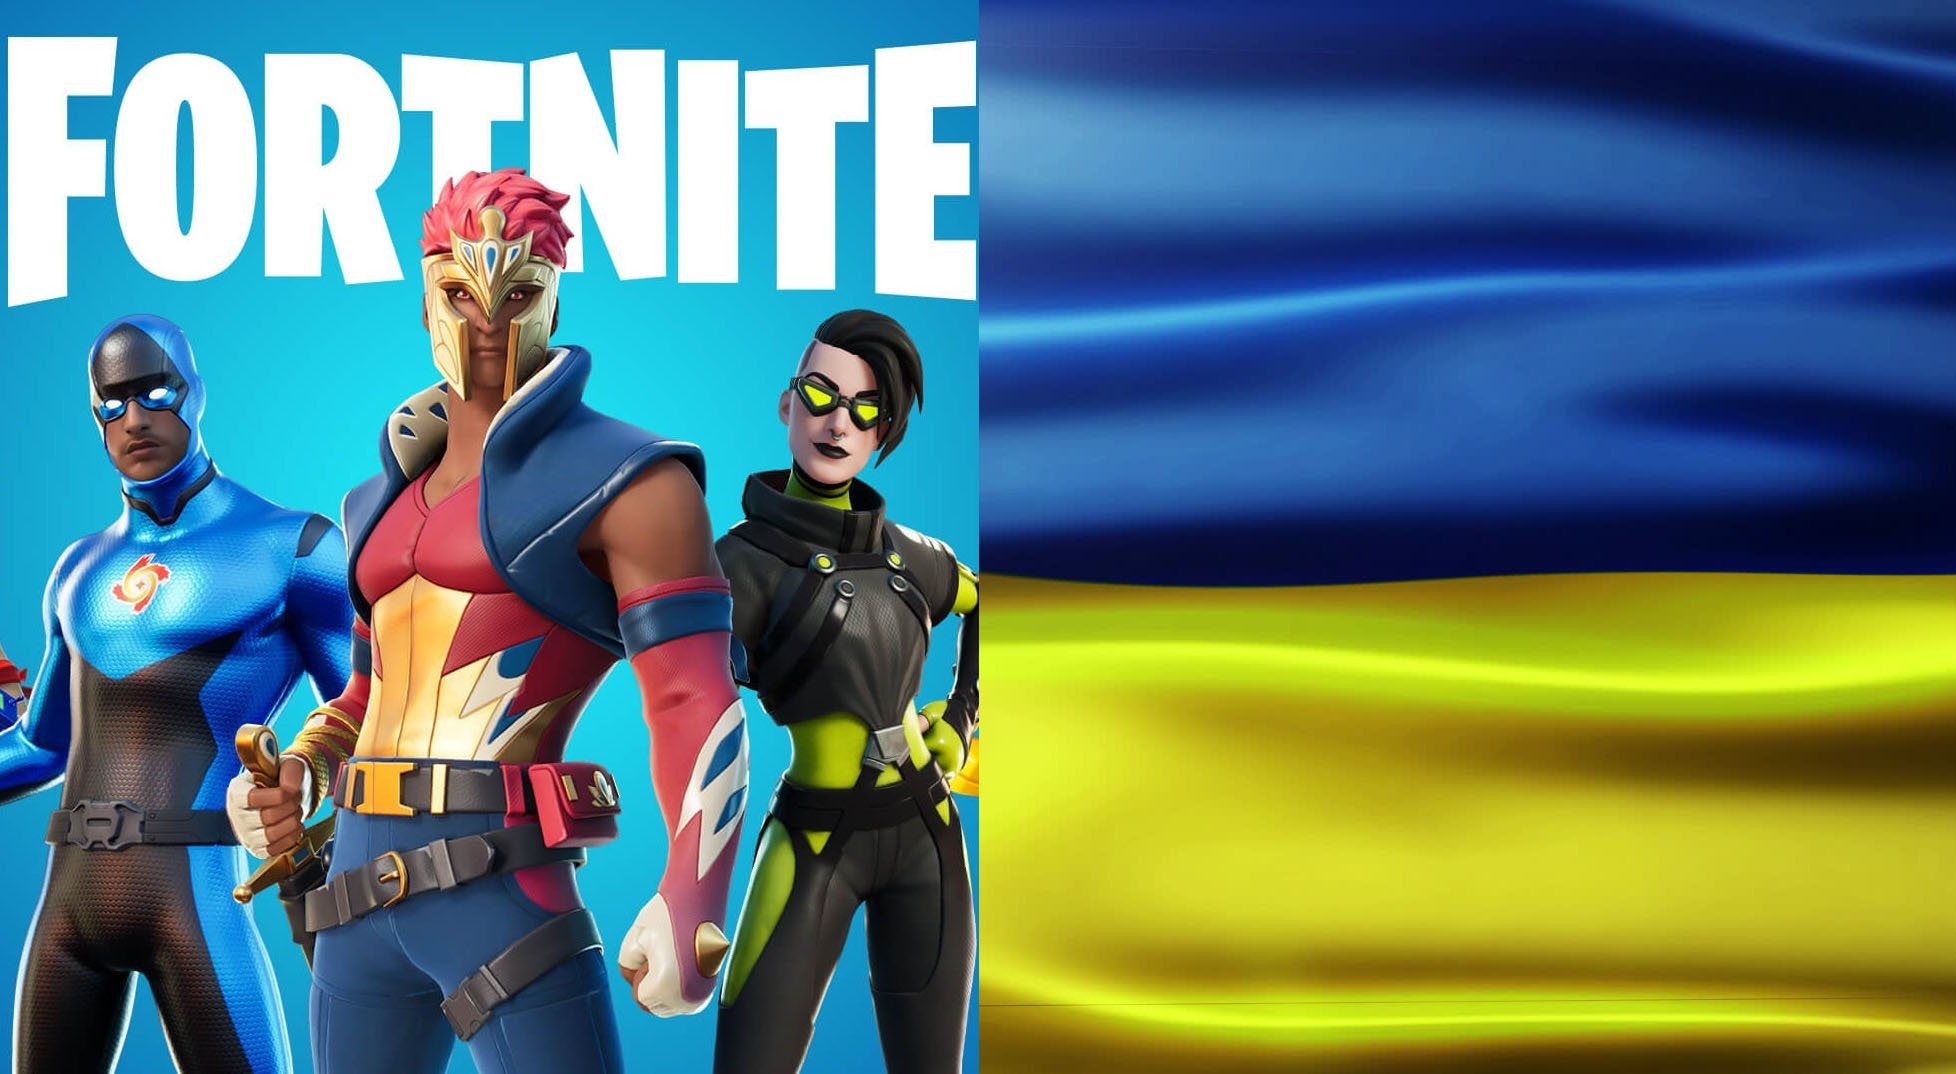 Fortnite: Το δημοφιλές videogame συγκέντρωσε ανθρωπιστική βοήθεια ύψους 144 εκατ. δολαρίων για την Ουκρανία